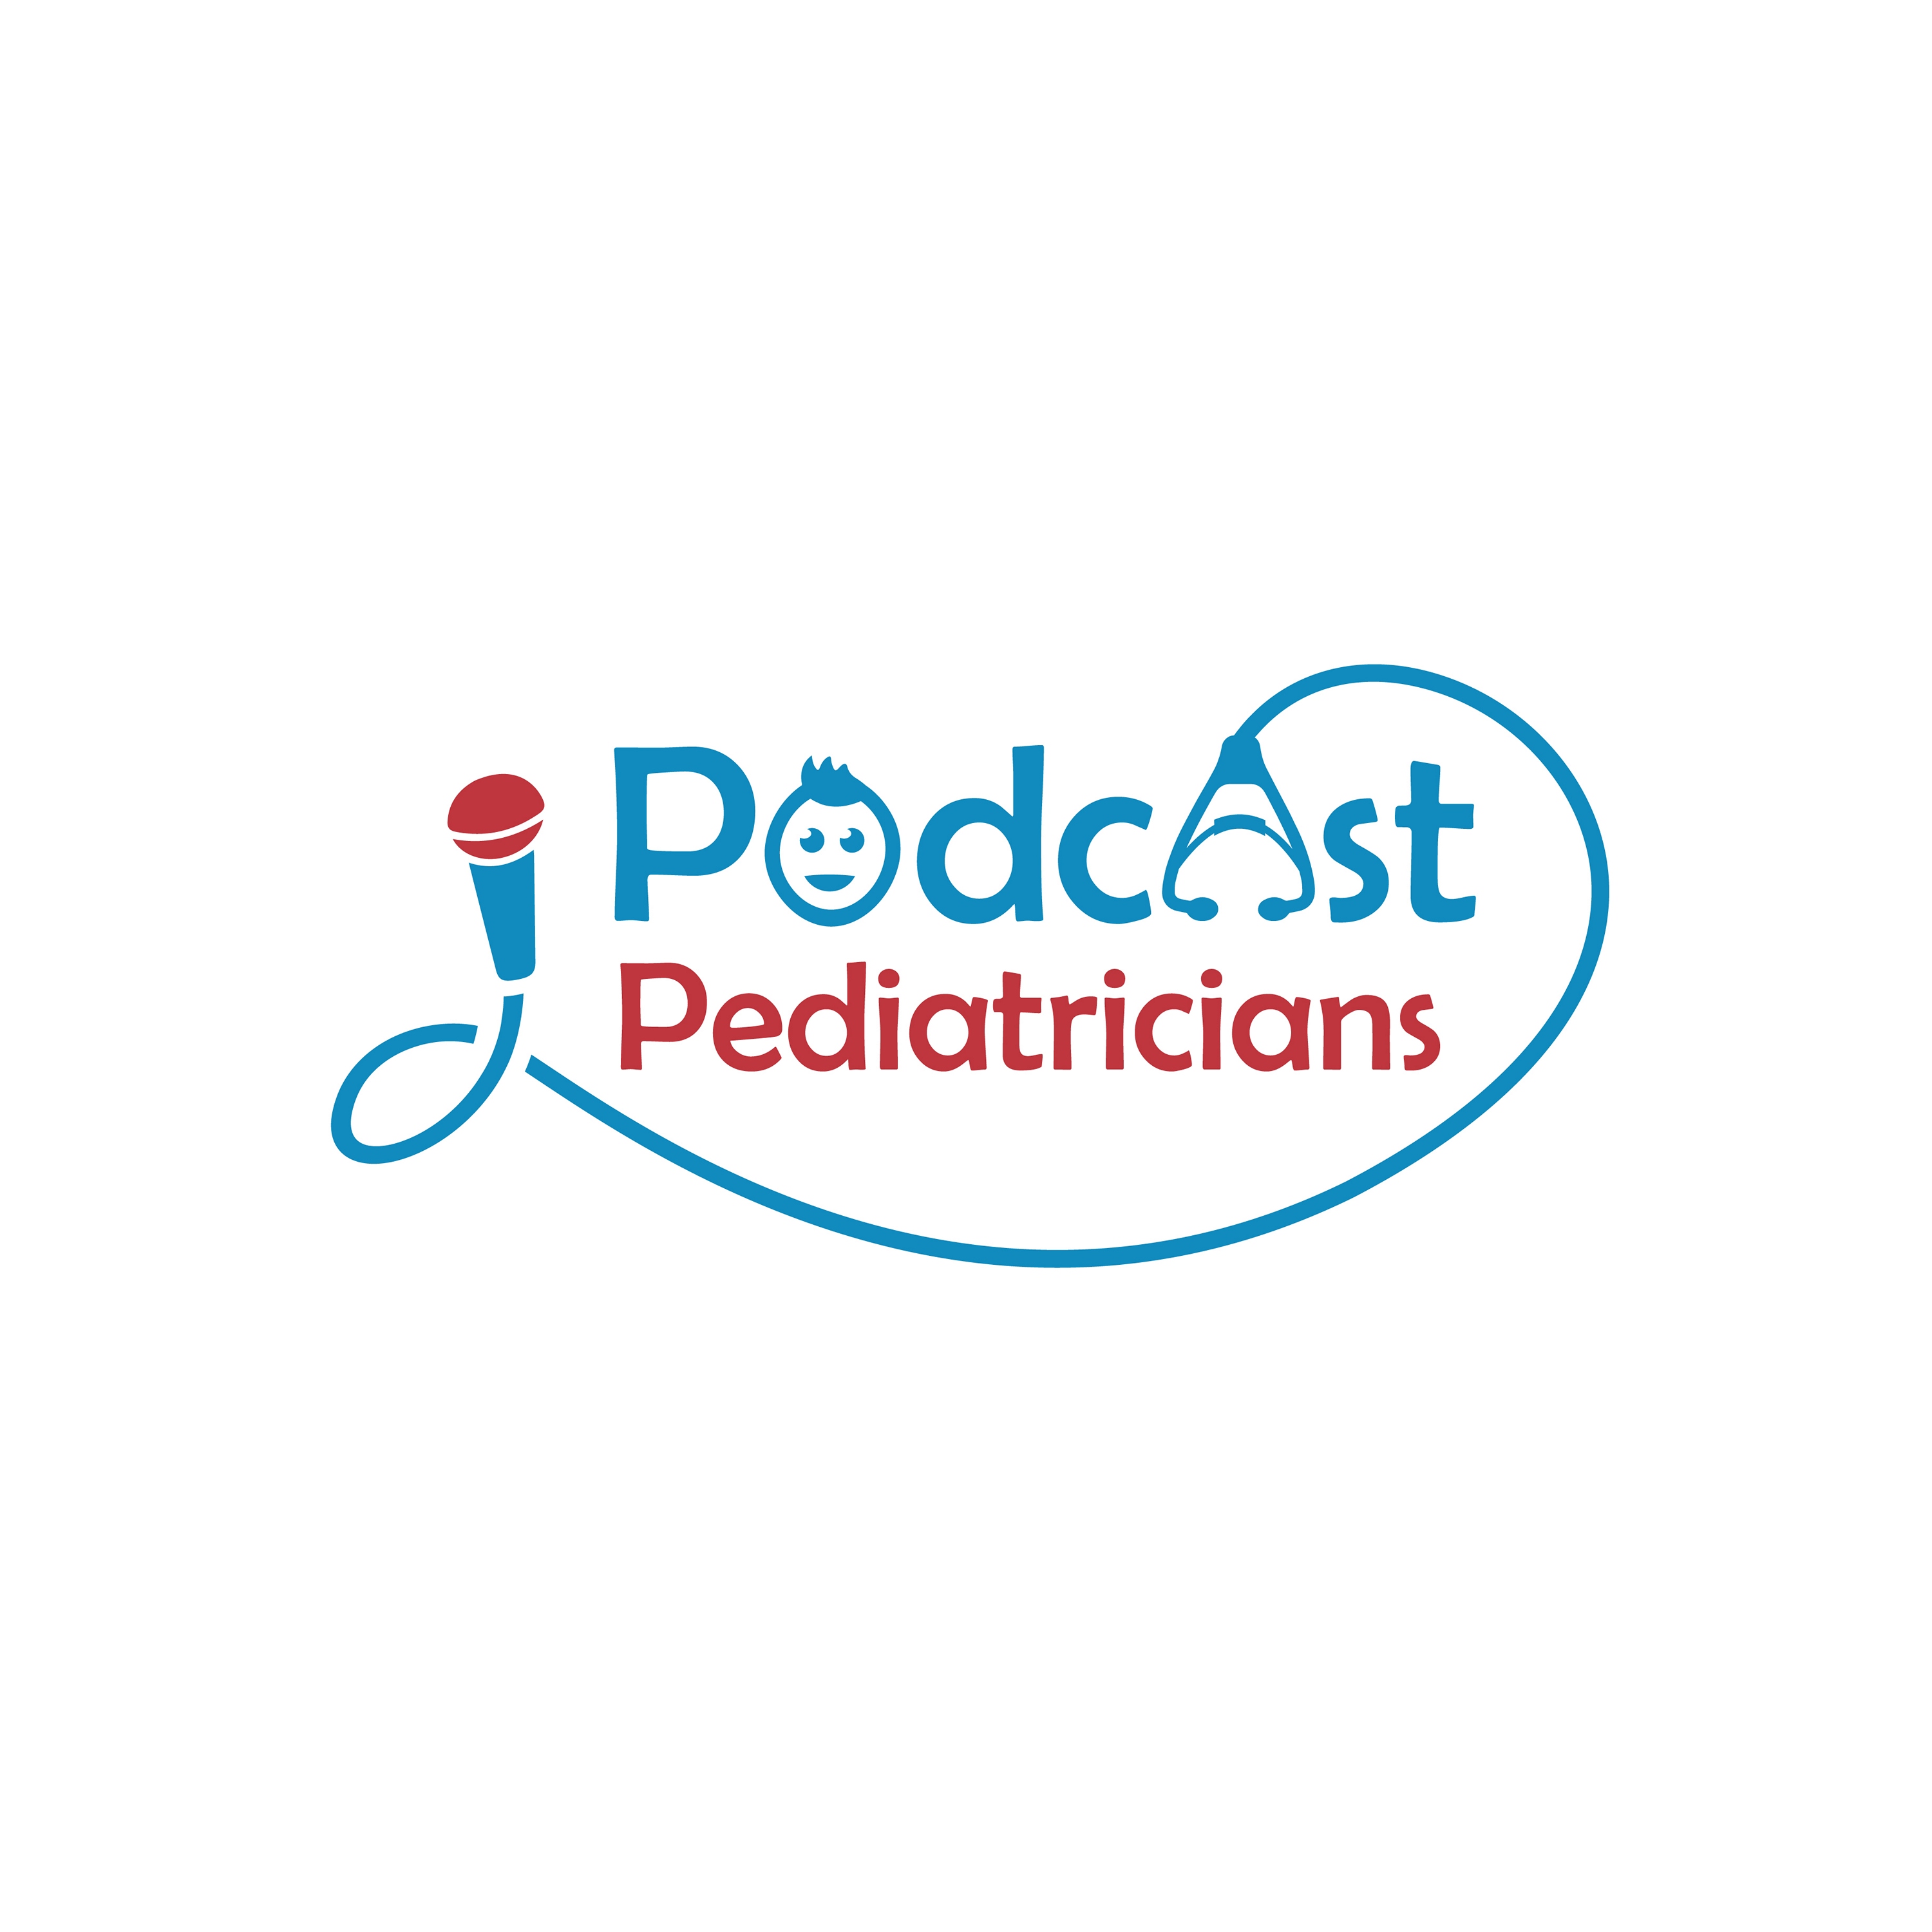 Podcast Pediatricians